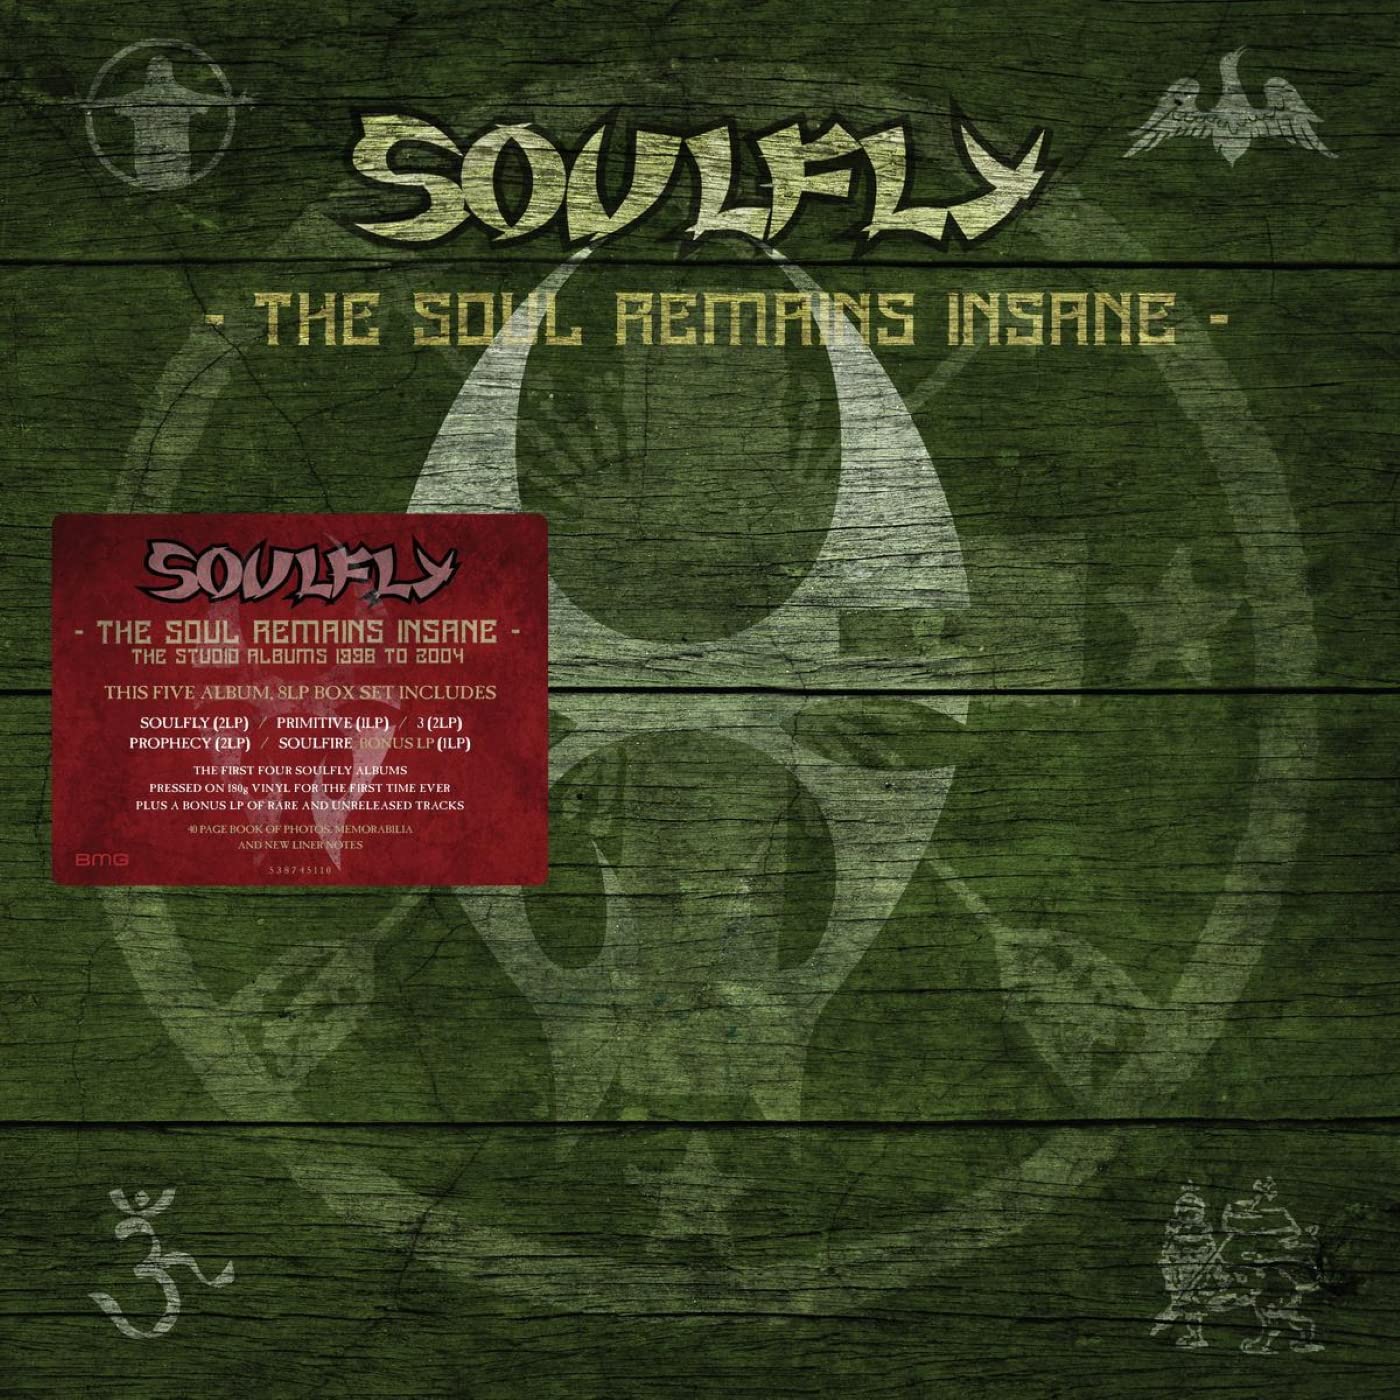 SOULFLY - The Soul Remains Insane: The Studio Albums 1998 to 2004 - 8LP - Vinyl Boxset